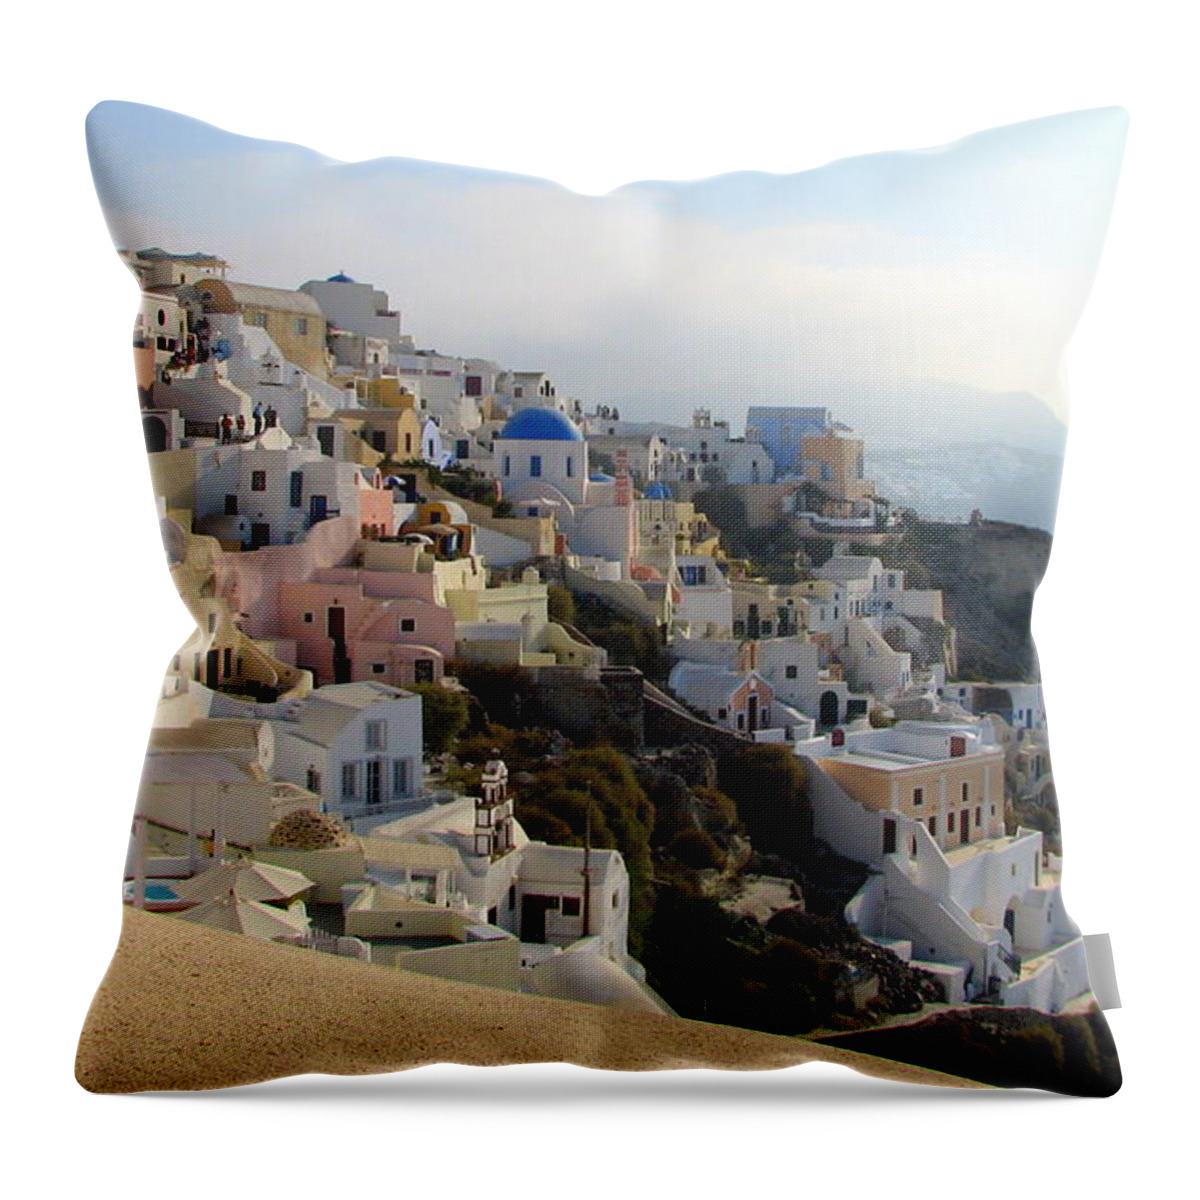 Santorini Throw Pillow featuring the photograph Fira in Santorini by Carla Parris